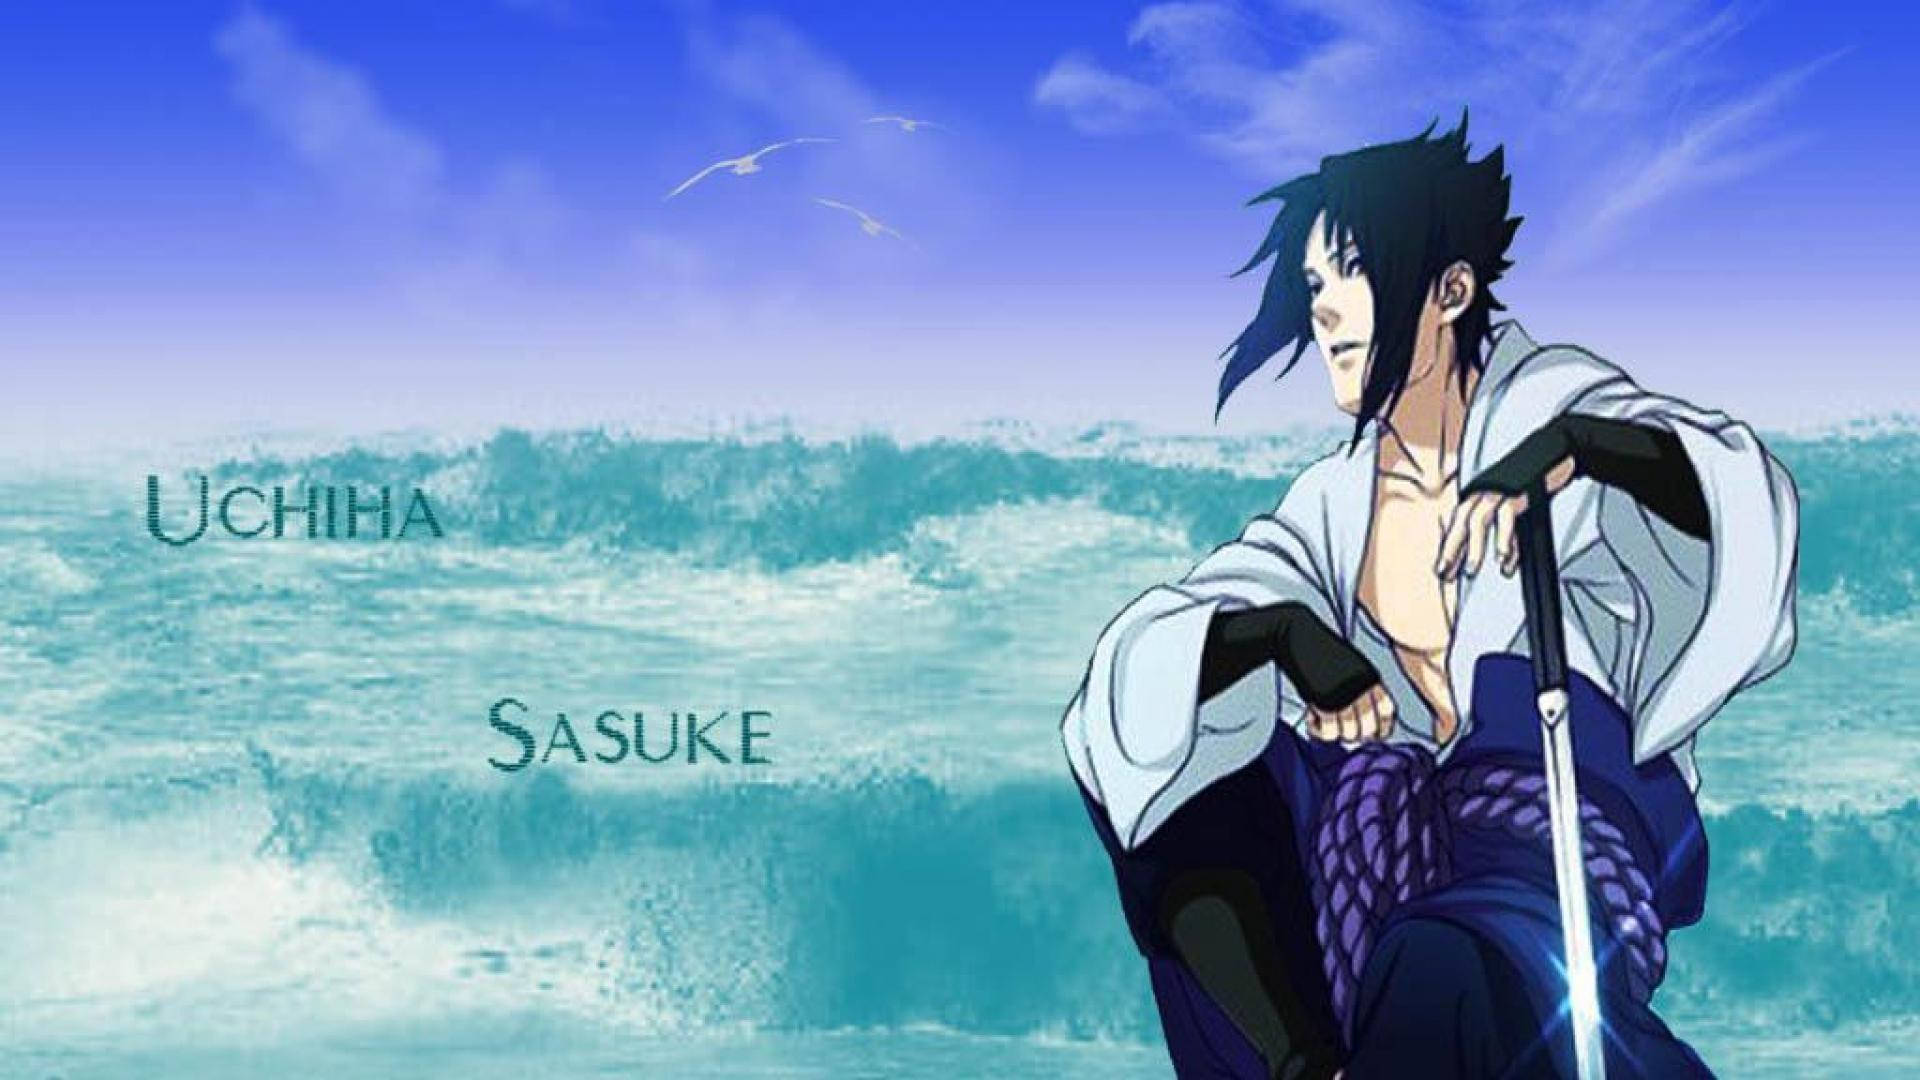 Aesthetic Sasuke Against Ocean Waves Background